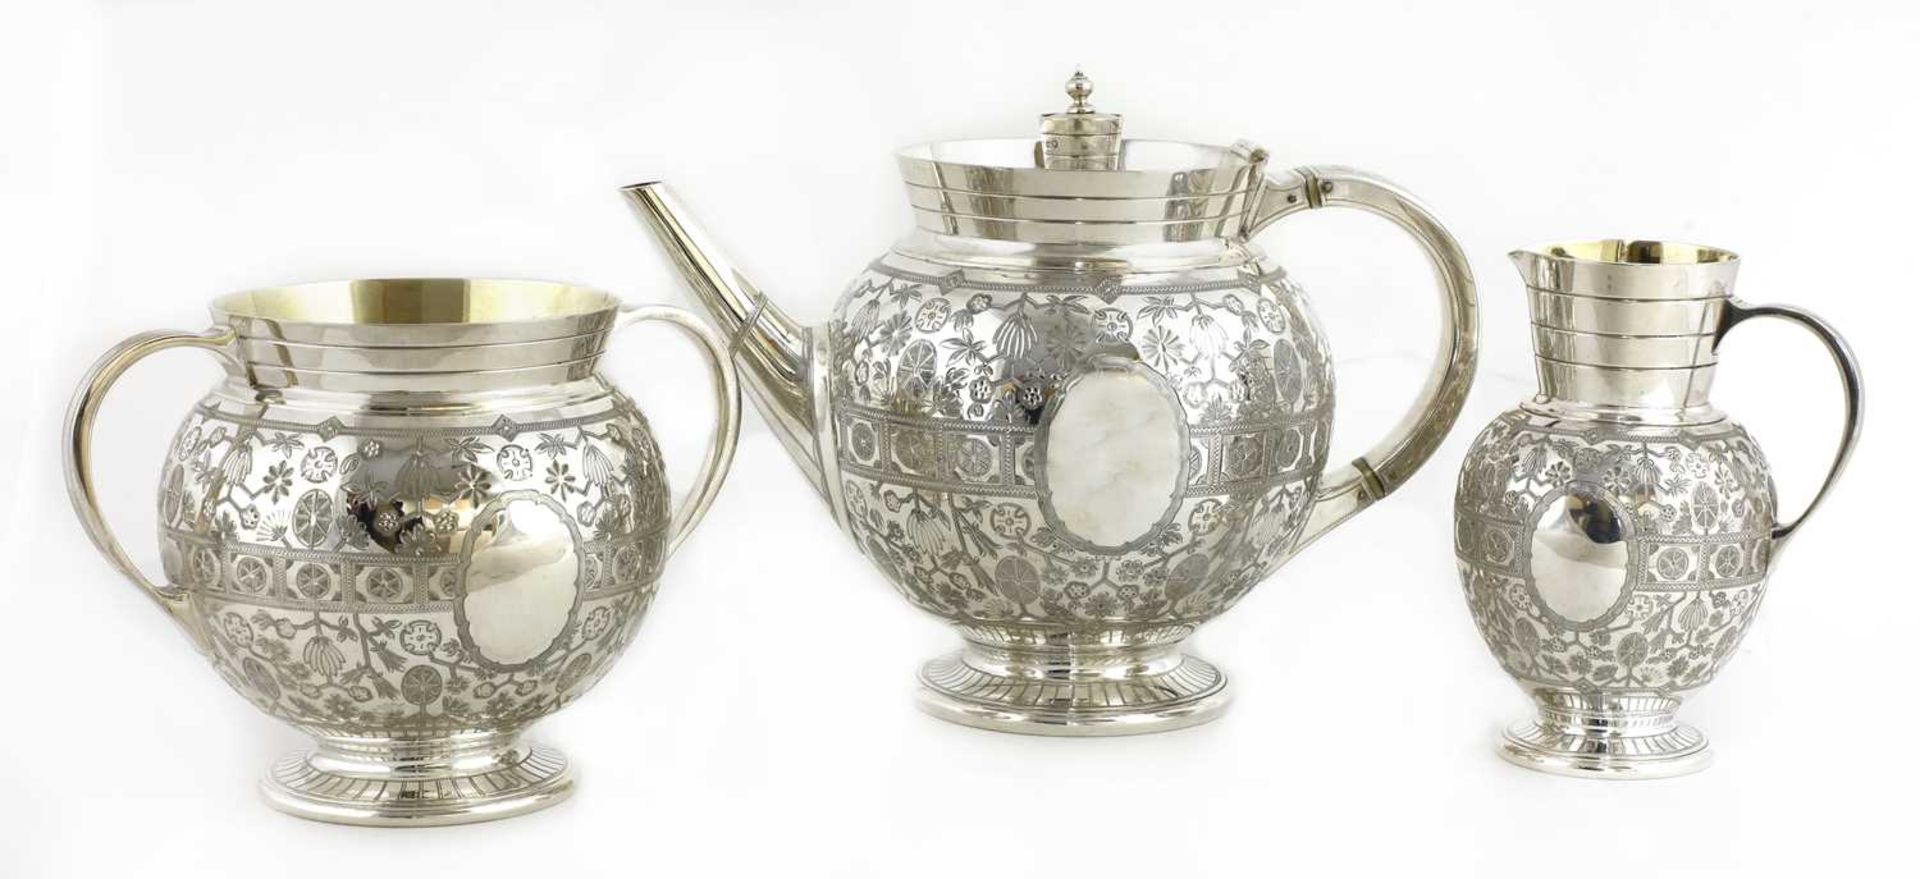 A victorian silver three-piece tea set